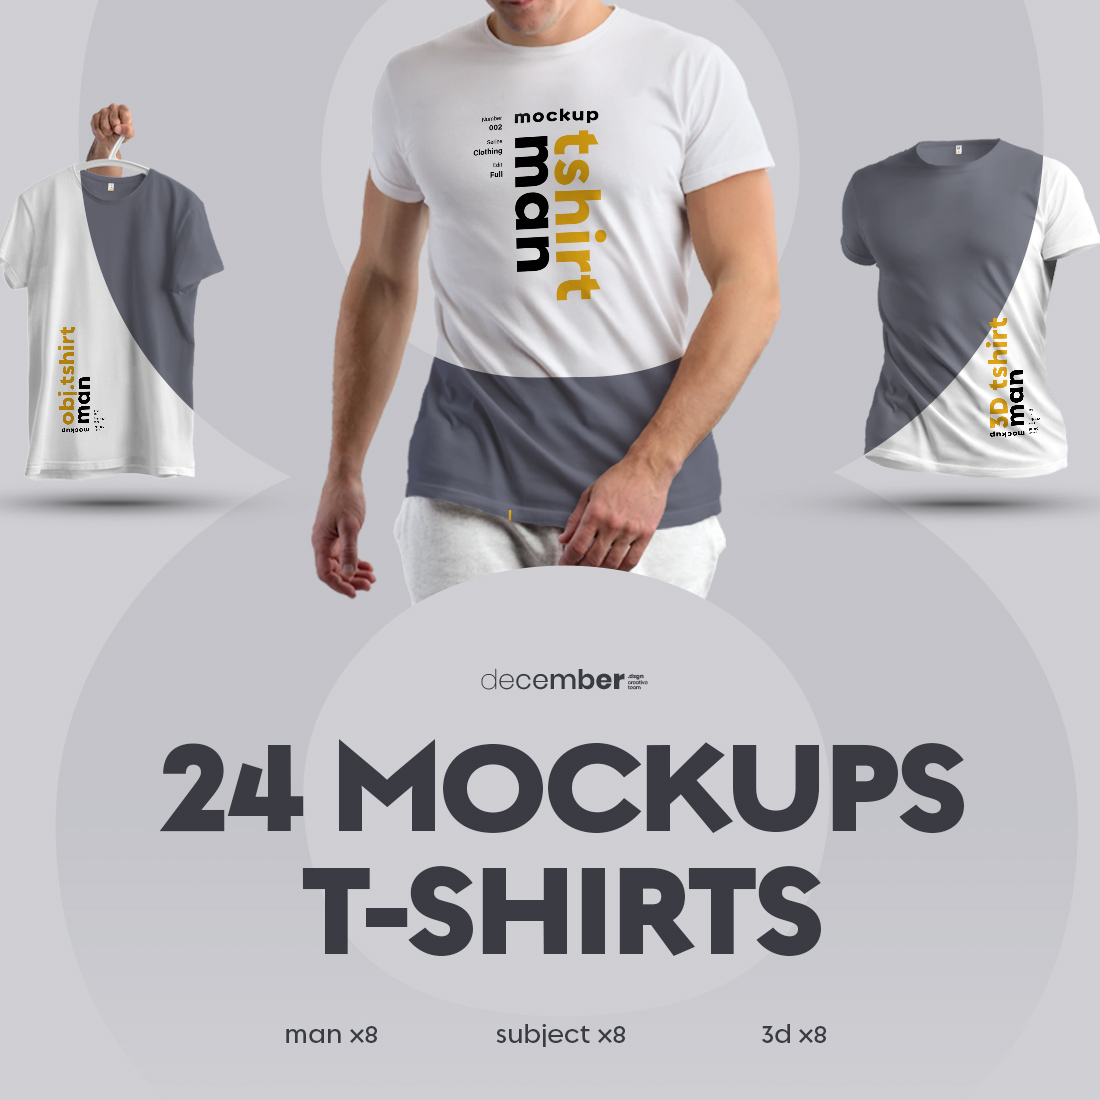 24 MockUps Man T-Shirt Cover Image.